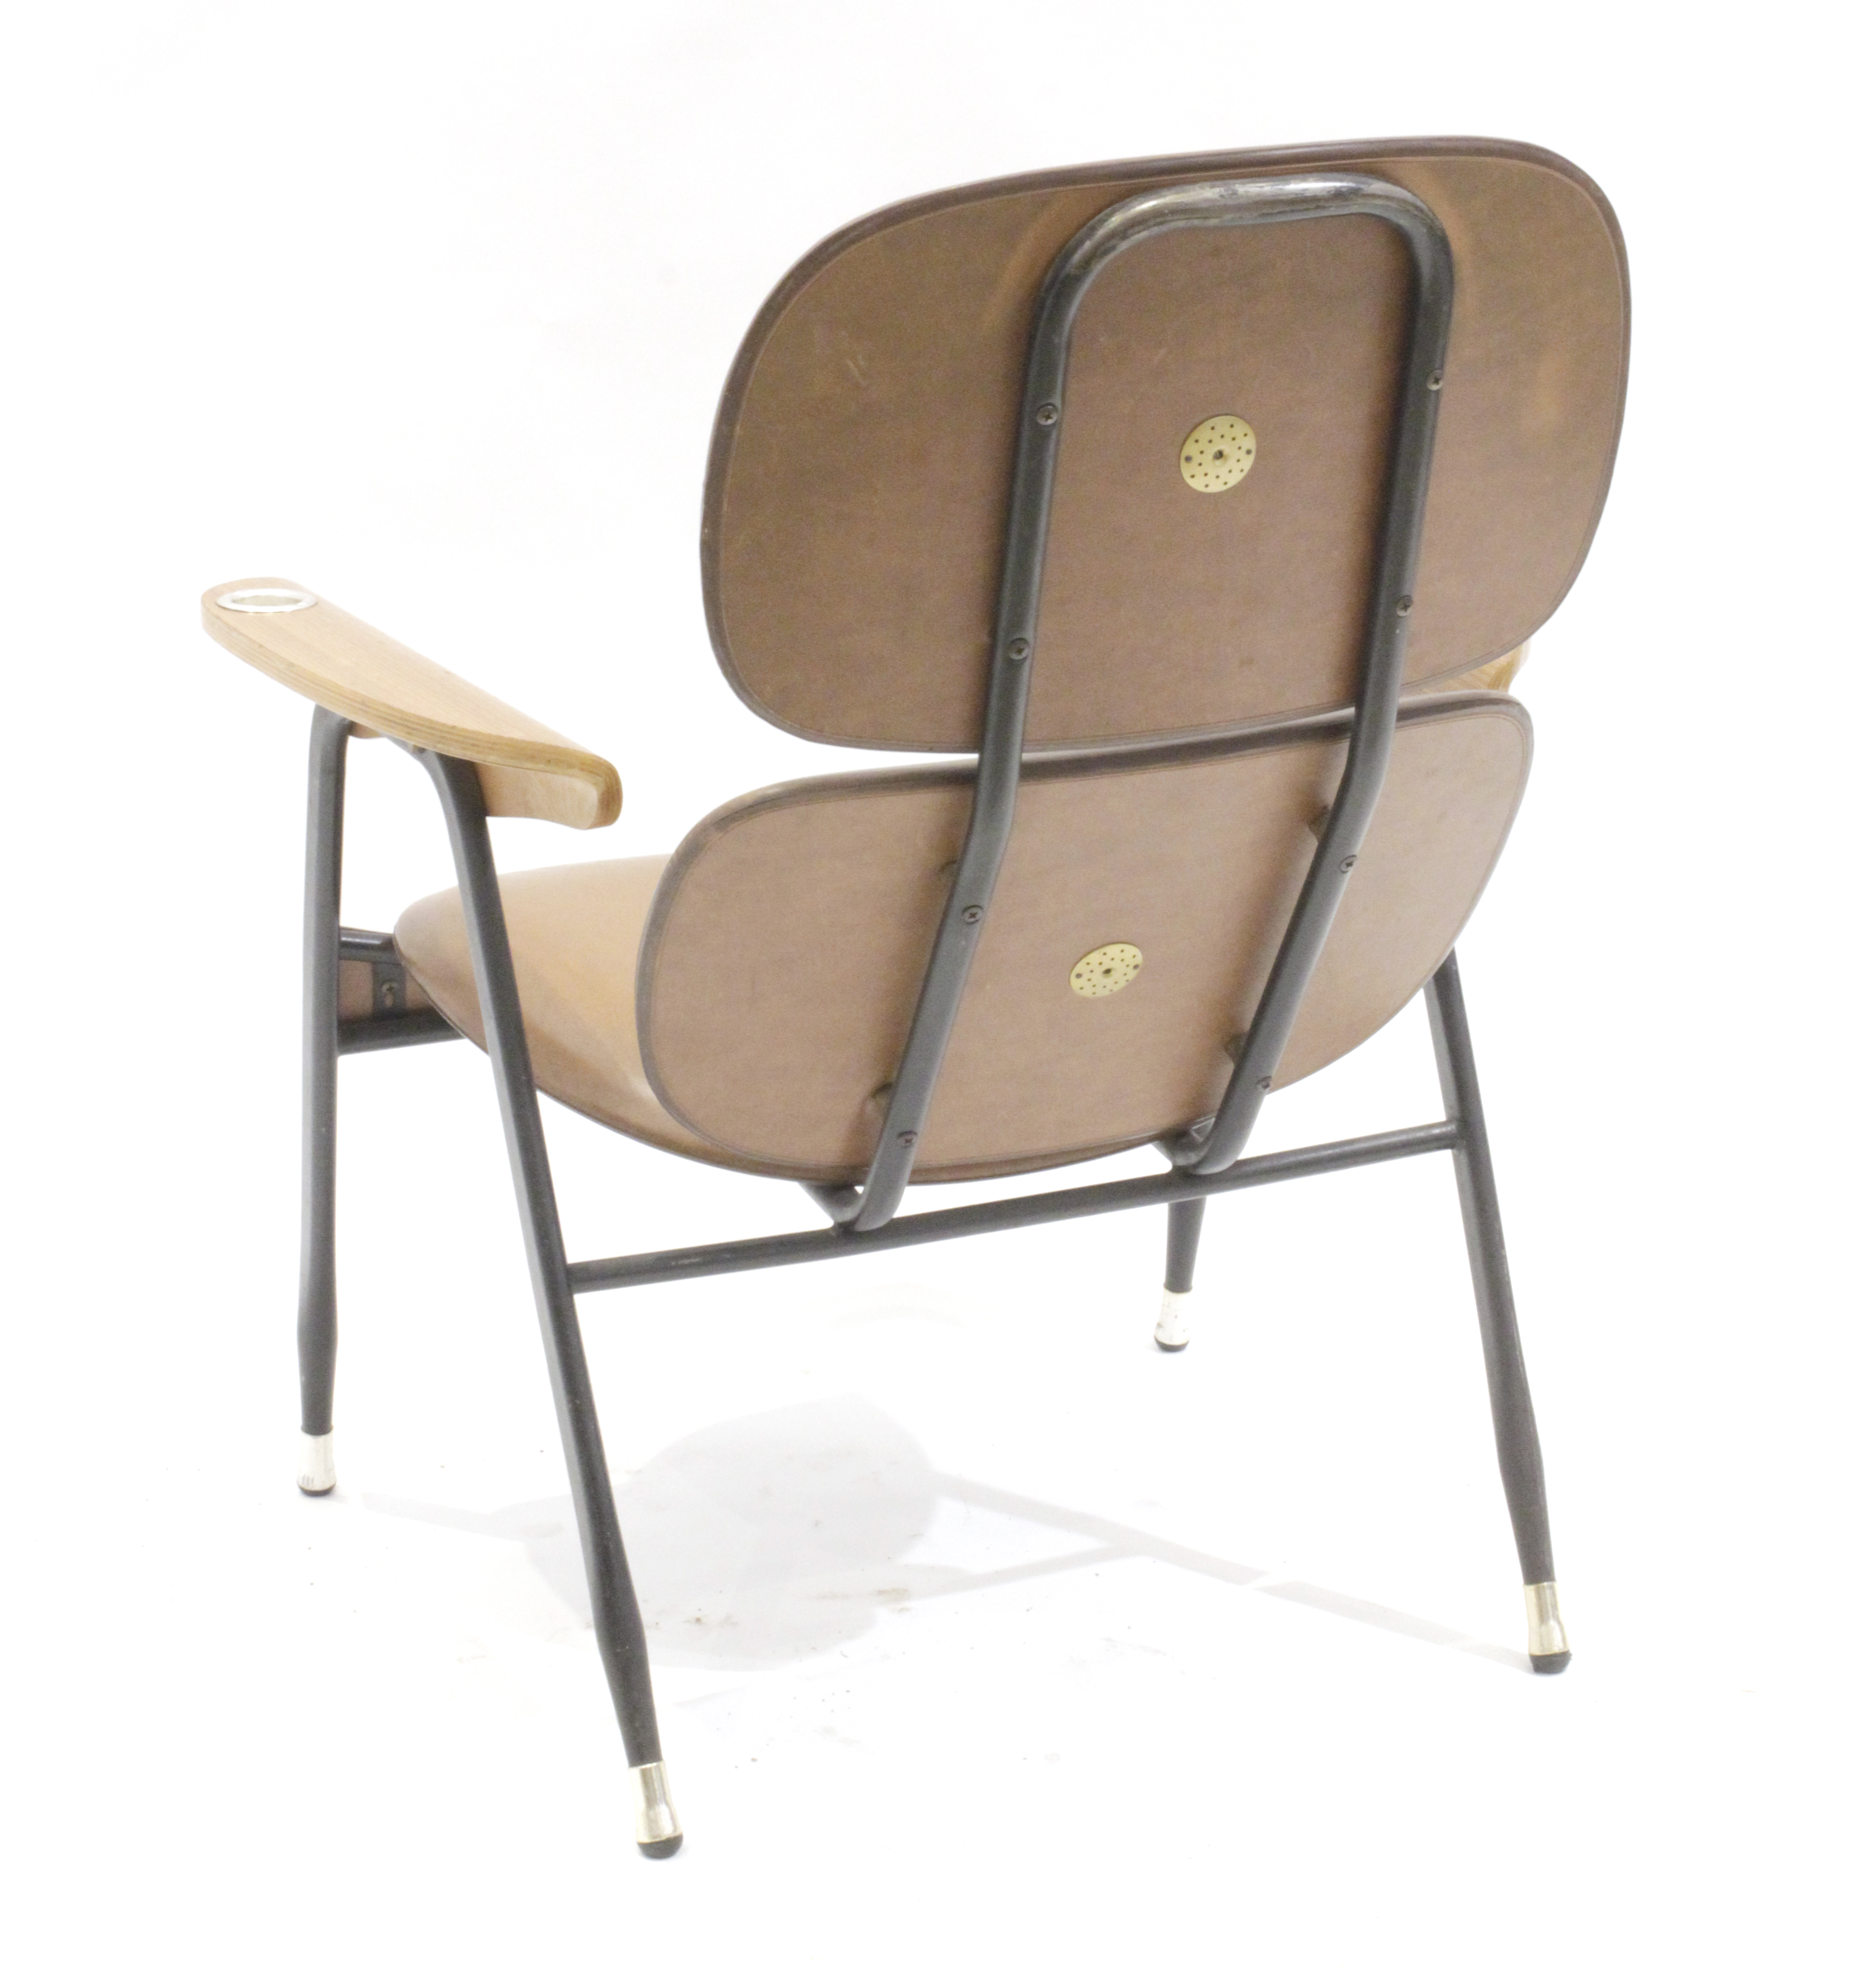 Marco Zanuso attrib. for Poltronova. A pair of armchairs circa 1970 - Image 5 of 6